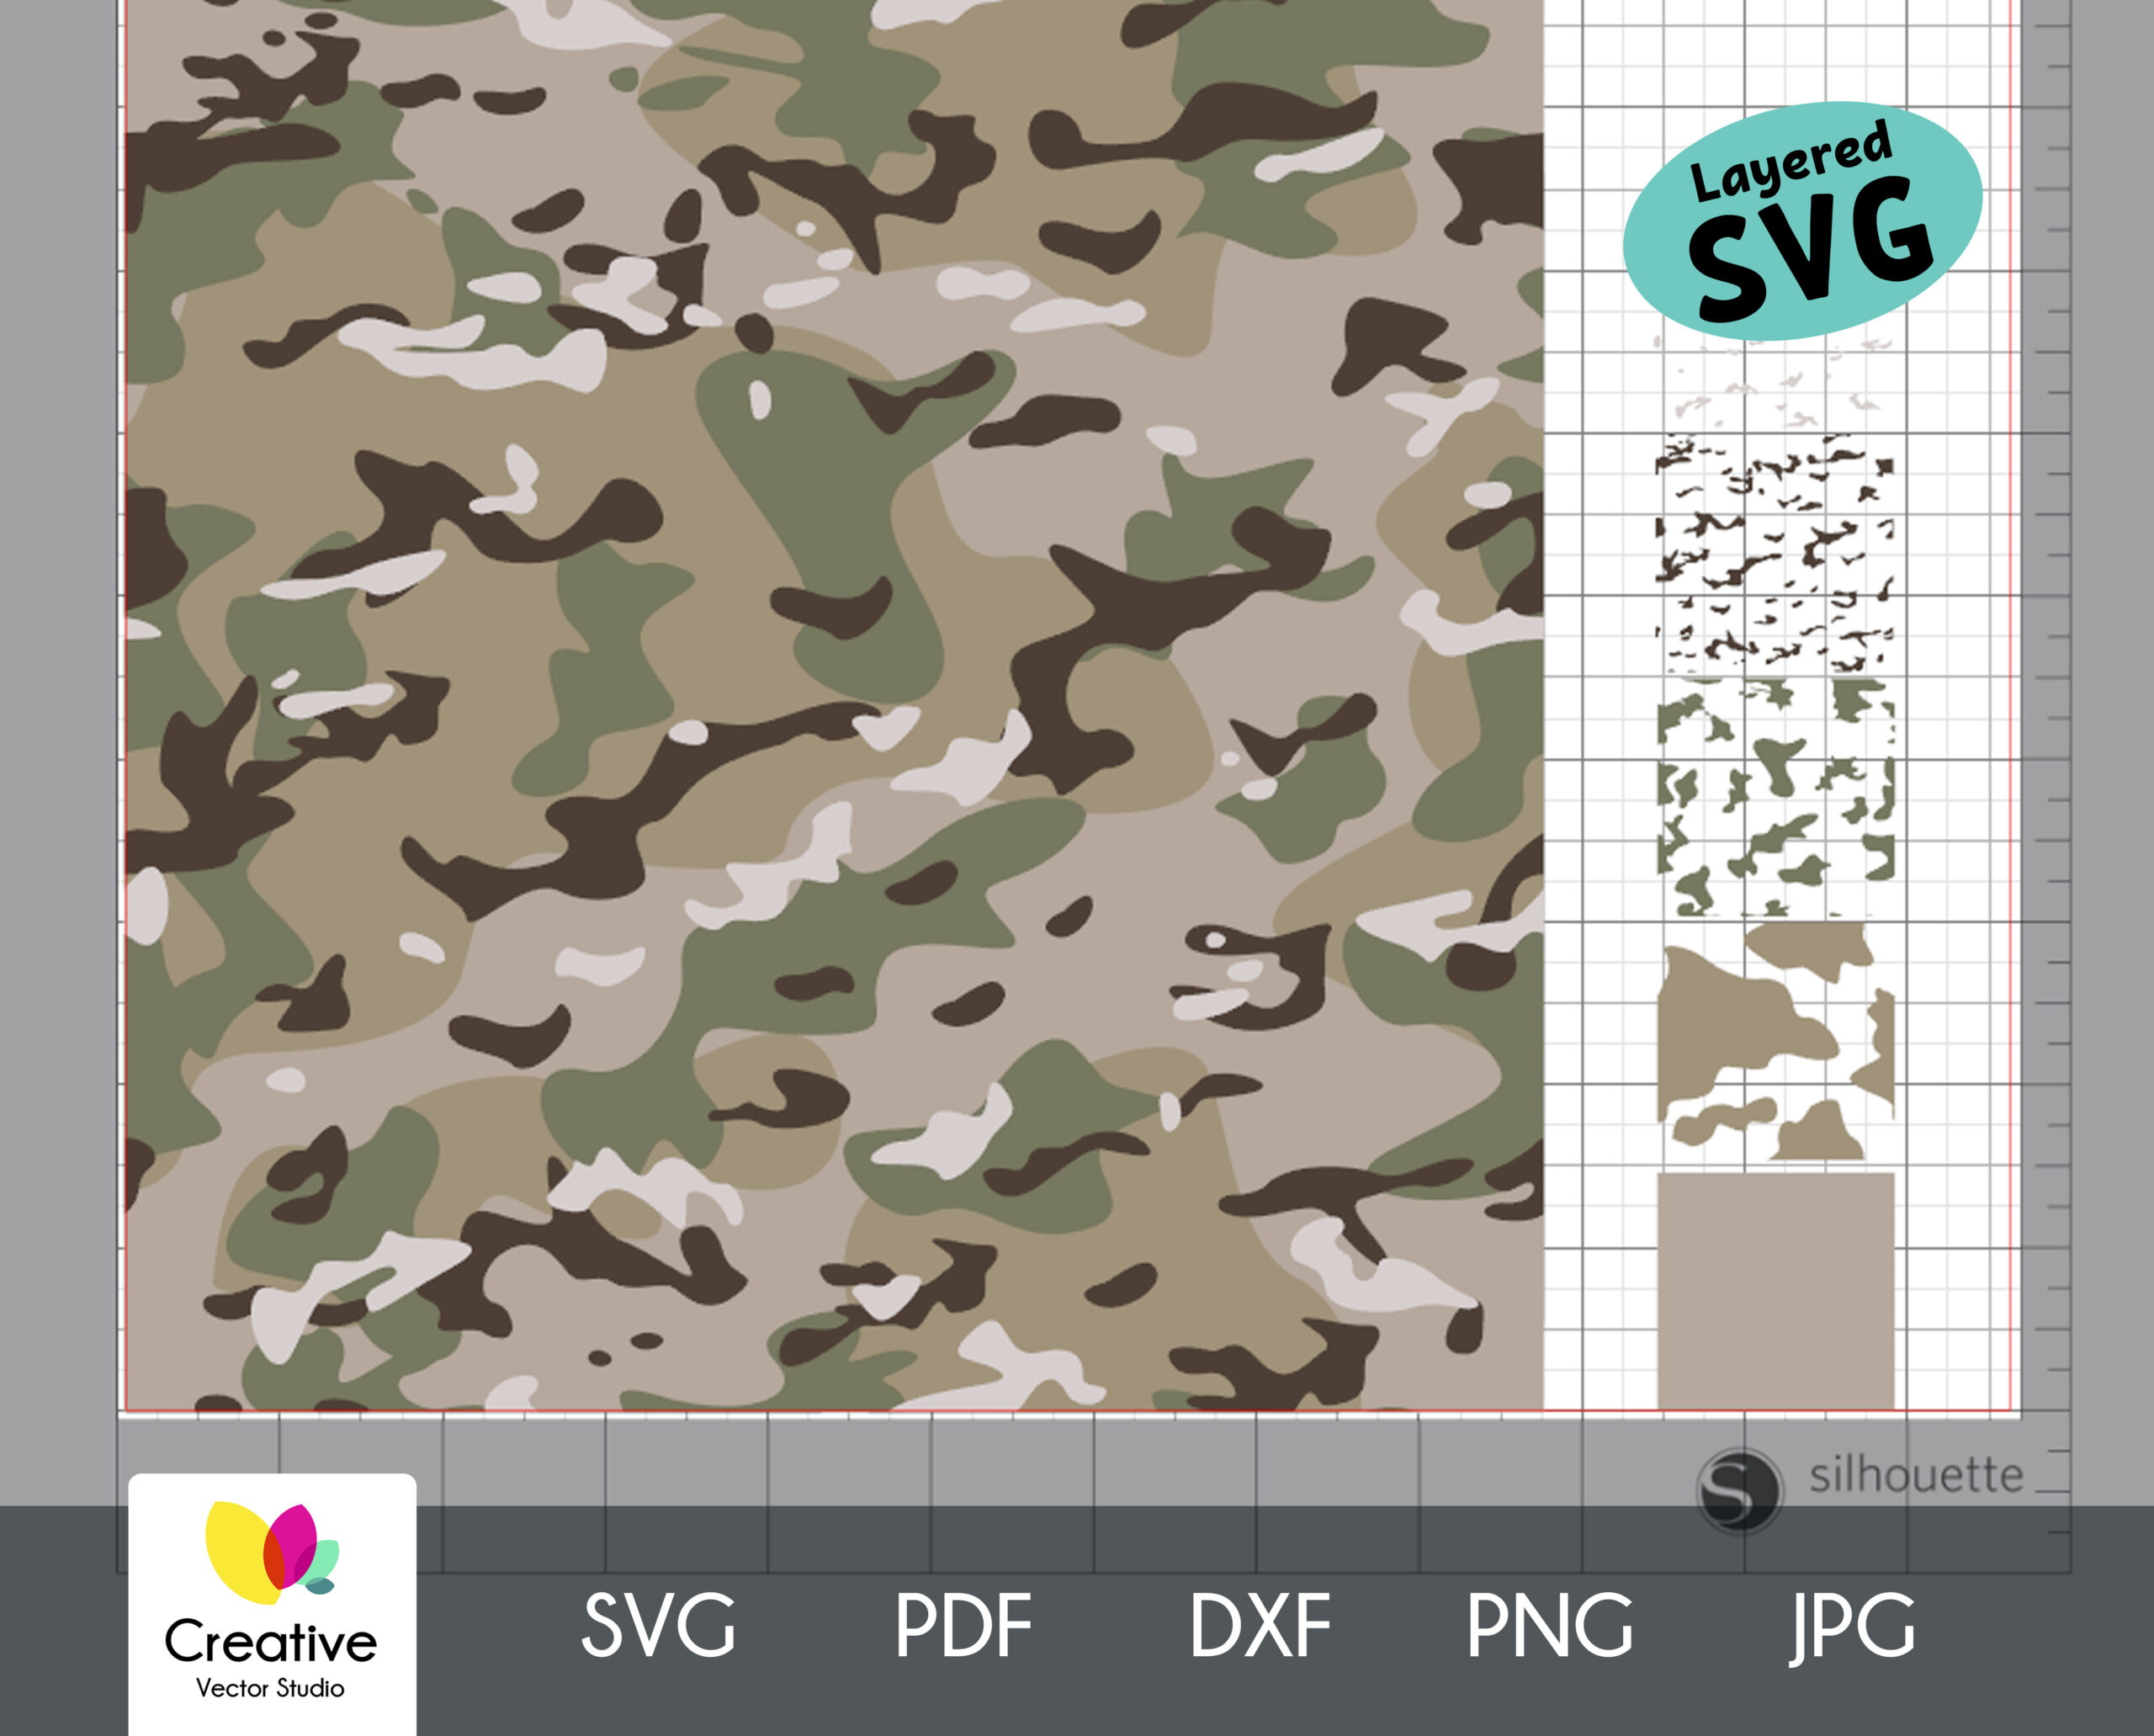 Multicam Camouflage SVG Seamless Pattern - Creative Vector Studio